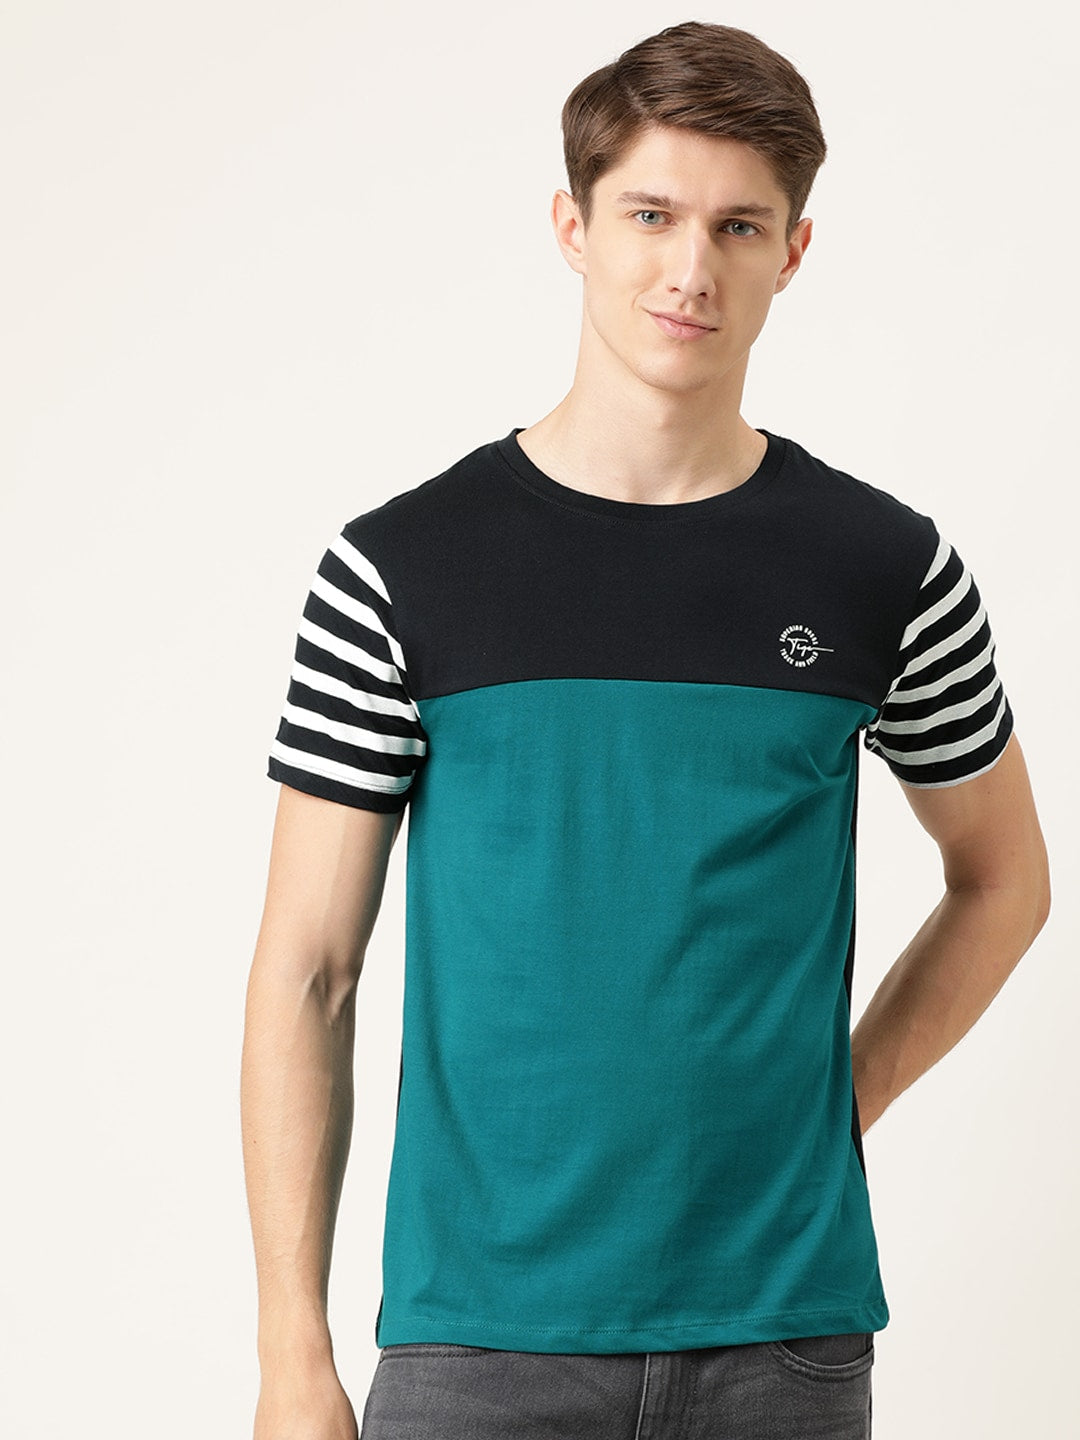 Shop Men Colourblocked Tshirts Online.